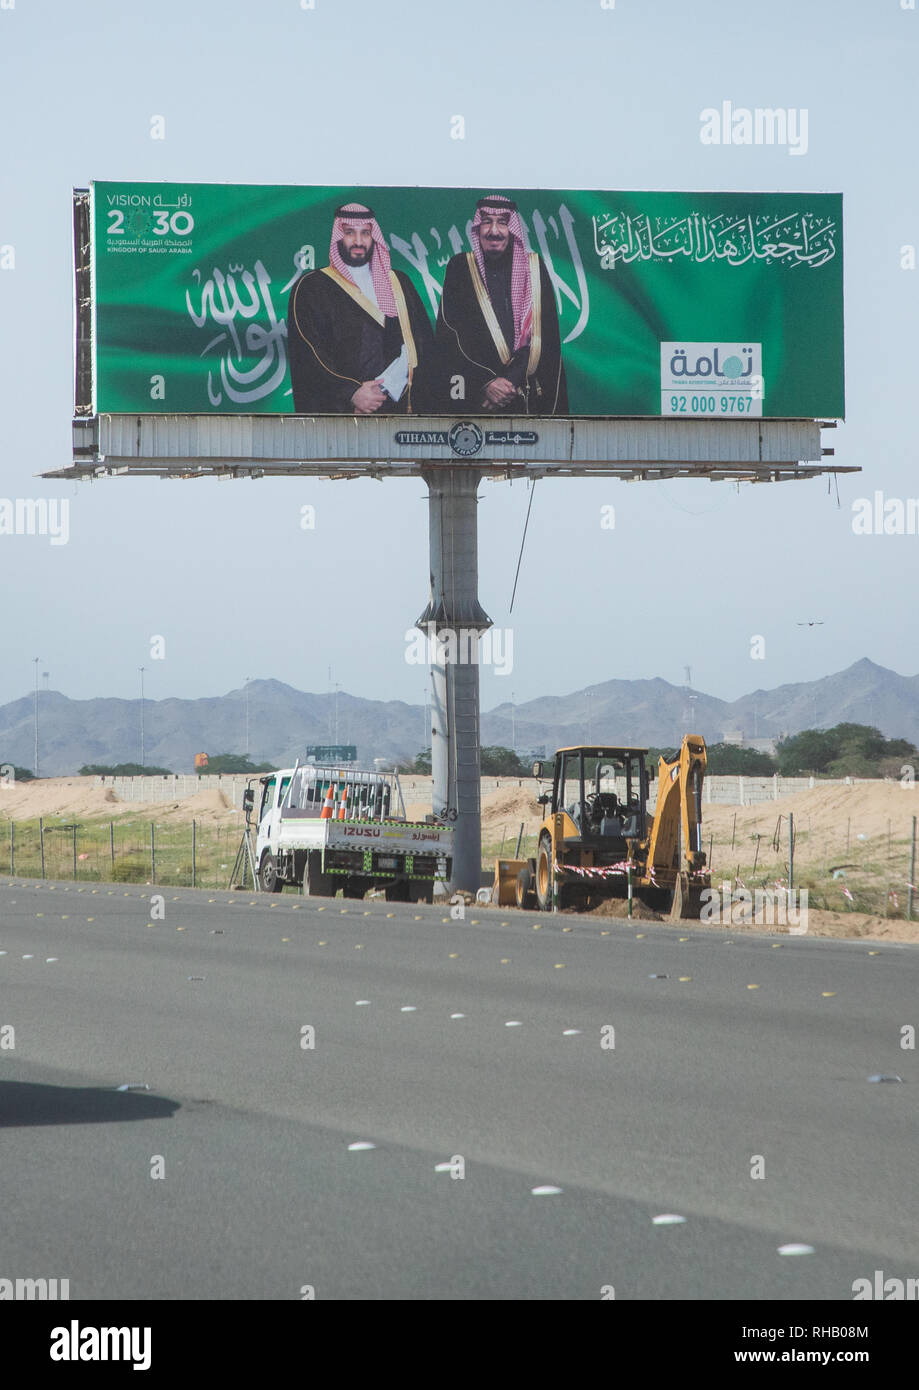 Kronprinz Mohammed Bin Salman und Salman Bin Abdulaziz Al Saud propaganda Billboard über Vision 2030, Mekka Provinz, Jeddah, Saudi-Arabien Stockfoto